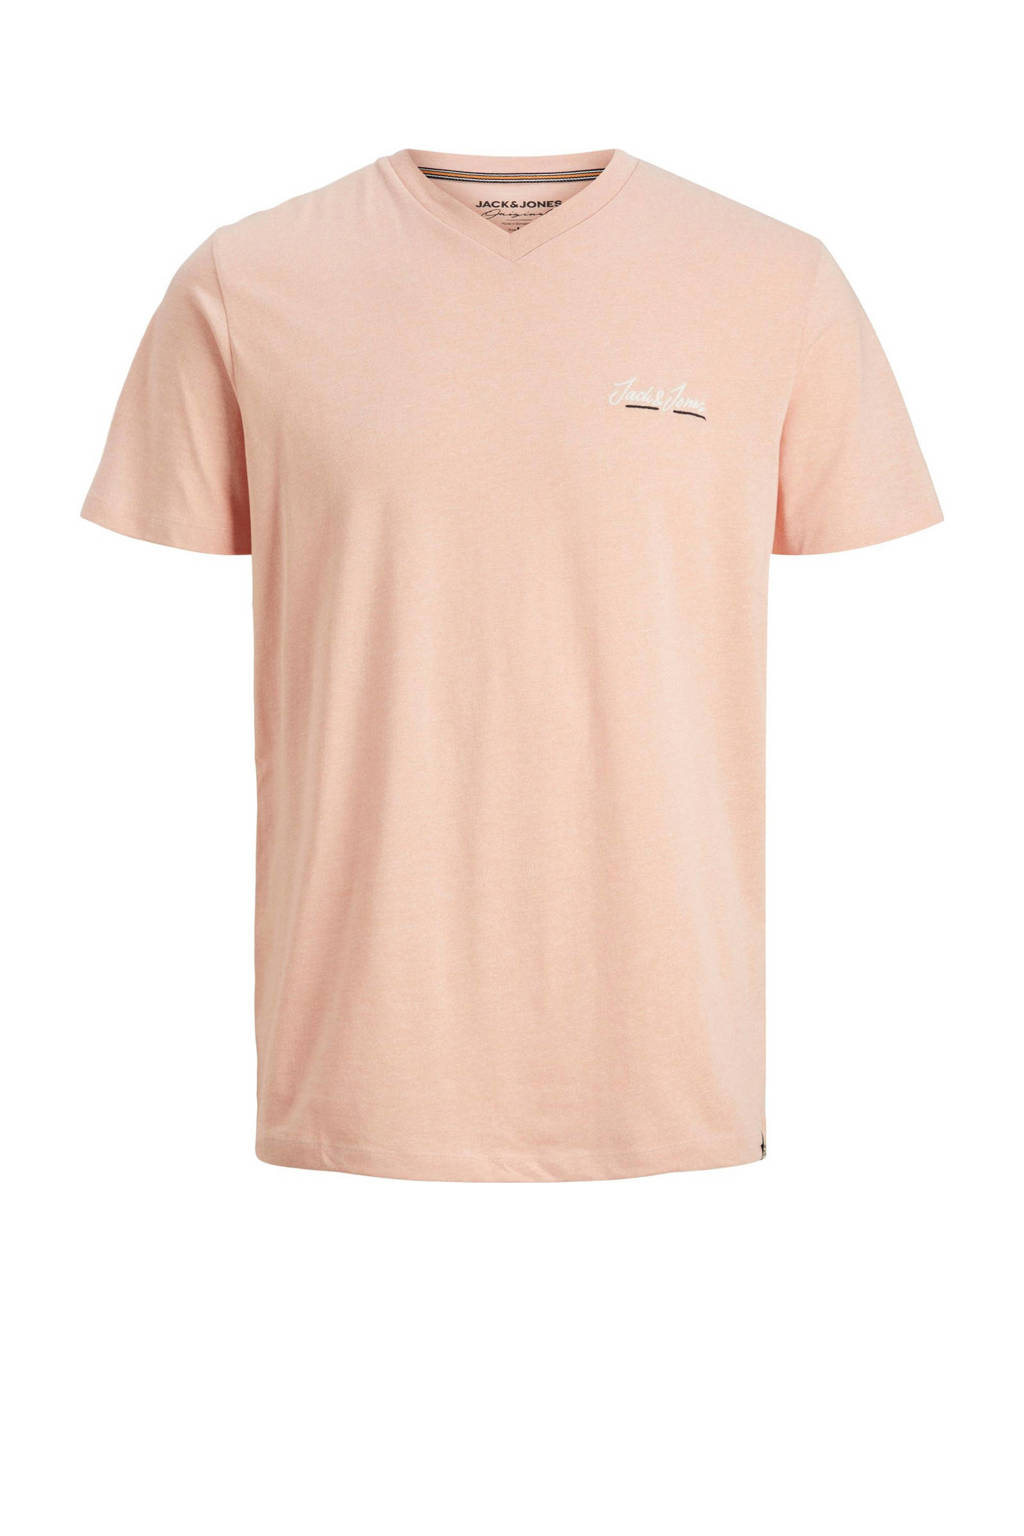 JACK & JONES ORIGINALS gemêleerd regular fit T-shirt JORTONS coral pink